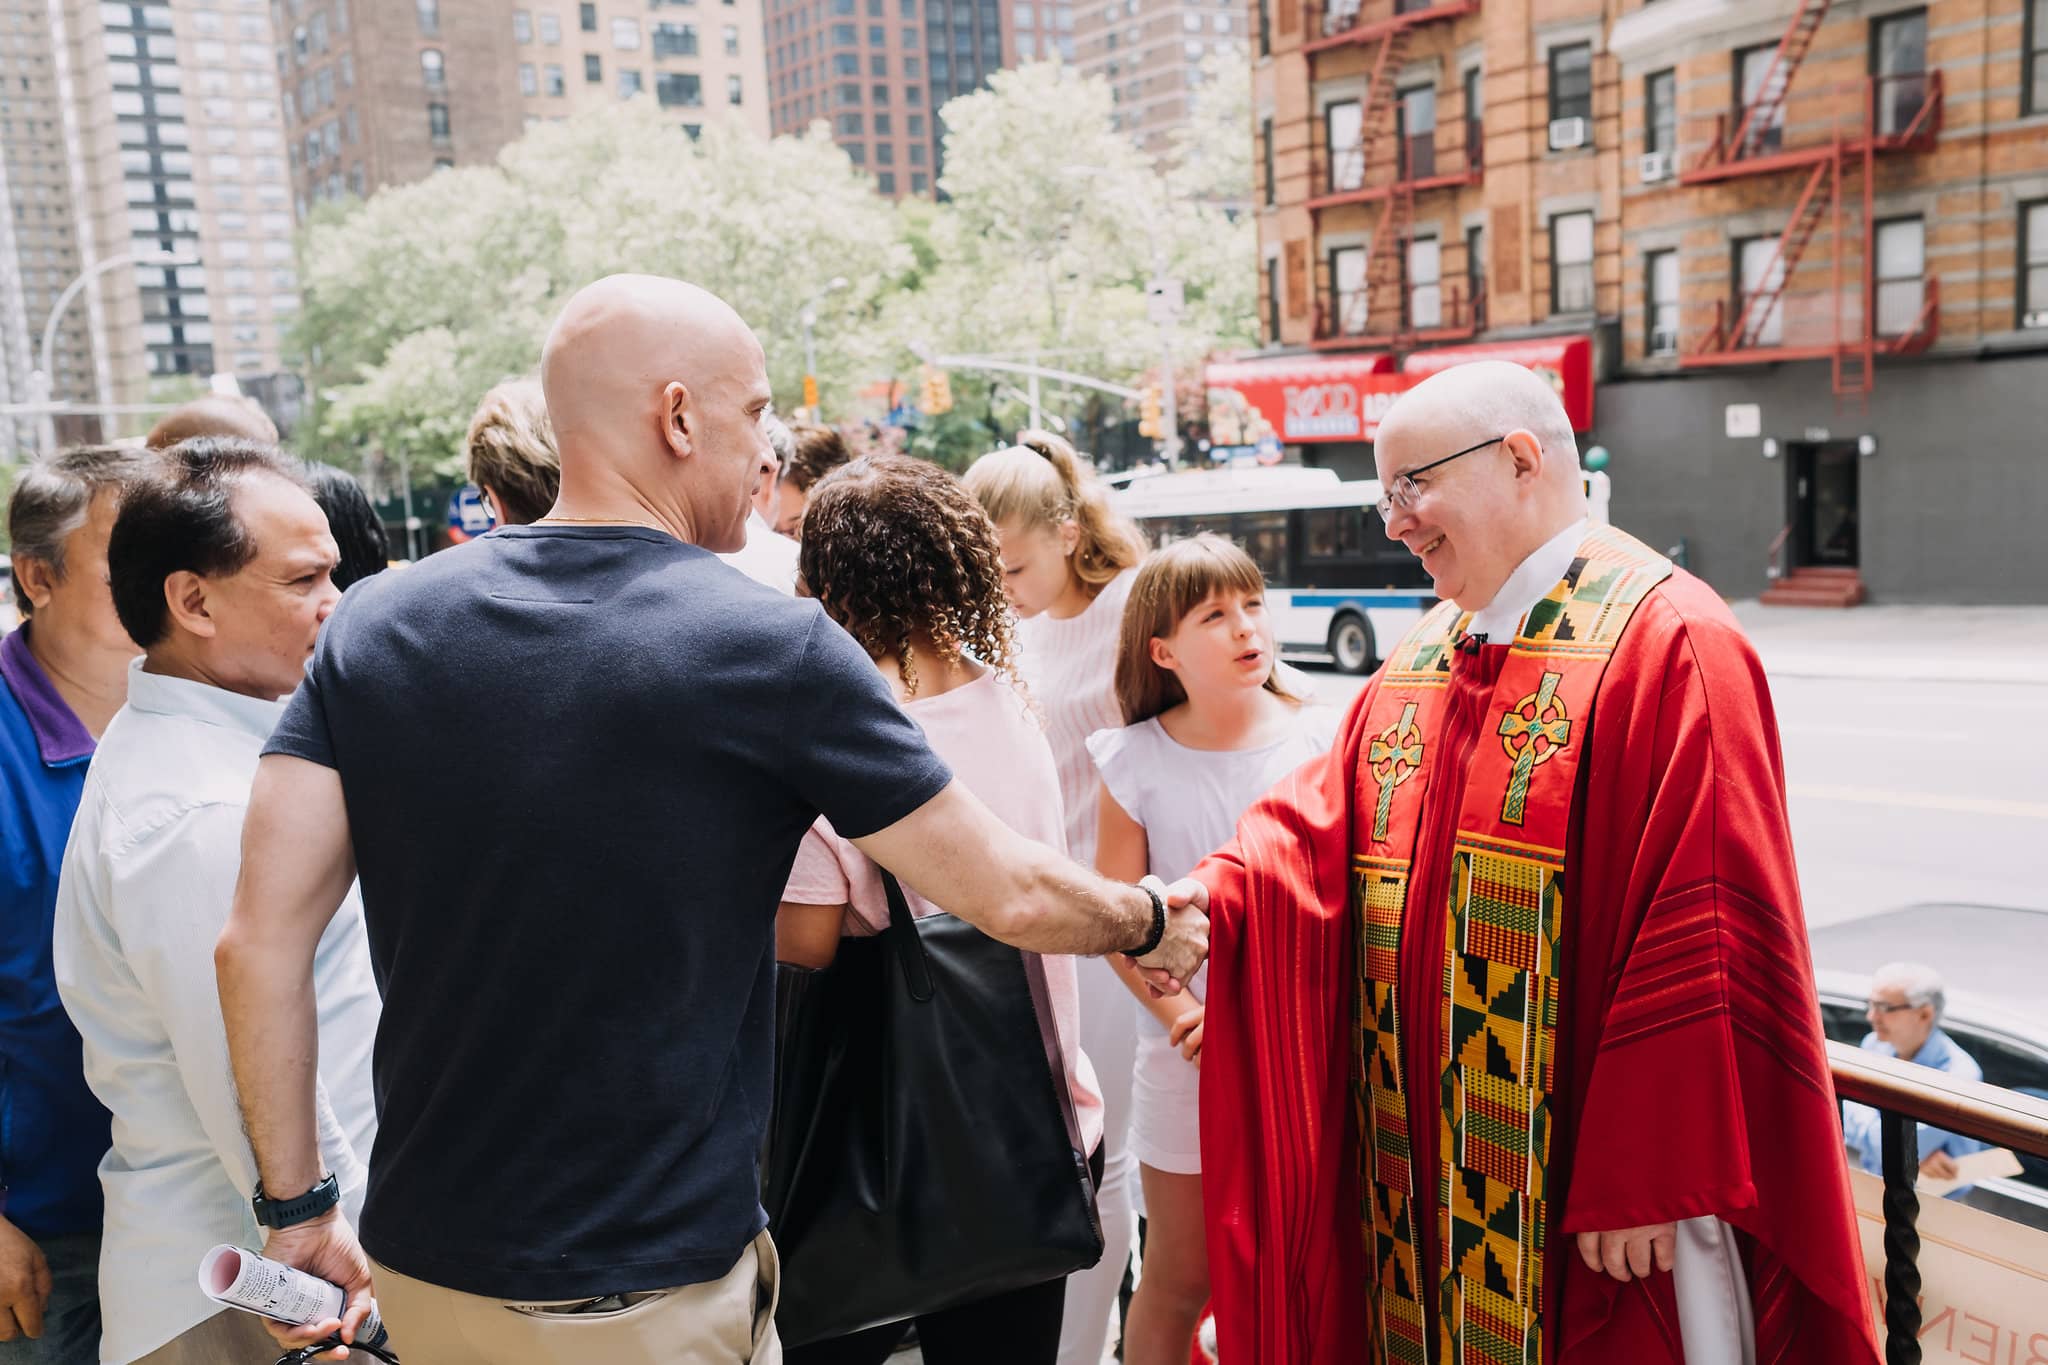 handshake-greeting-outside-mass-st-francis-de-sales-church-new-york-city.jpg